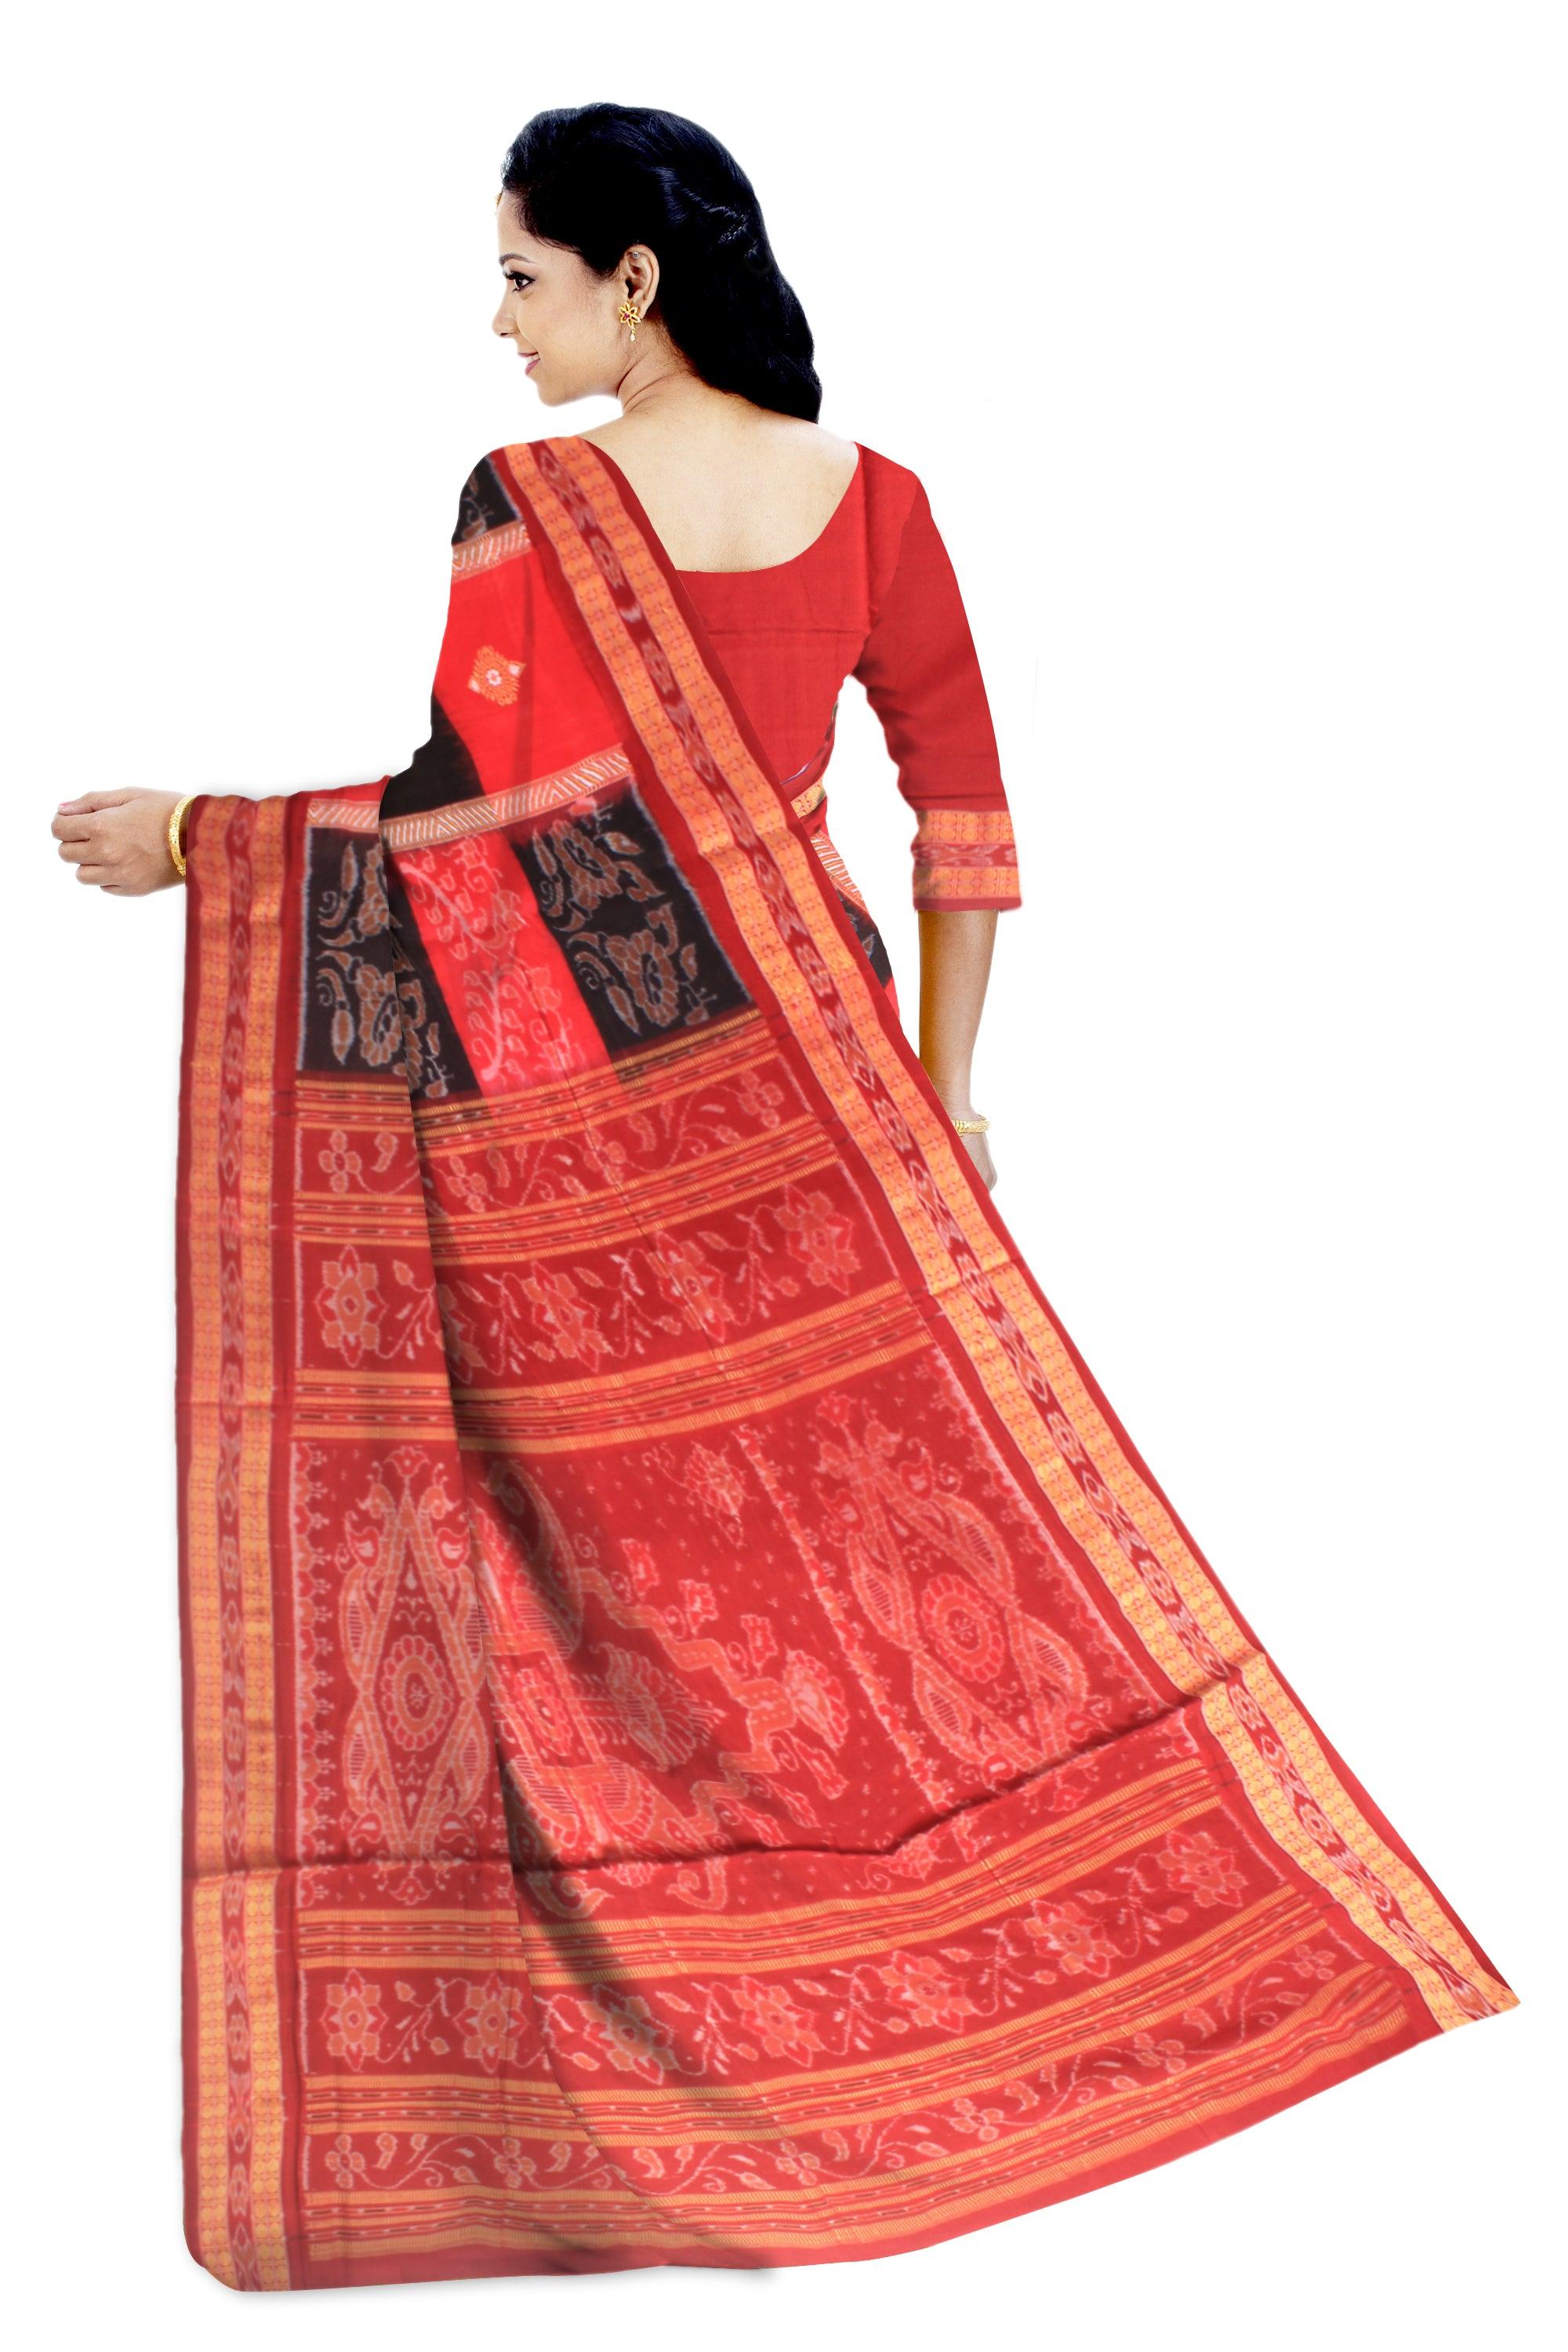 Sambalpuri Flowers pattern cotton saree in Red and Black color with blouse piece. - Koshali Arts & Crafts Enterprise